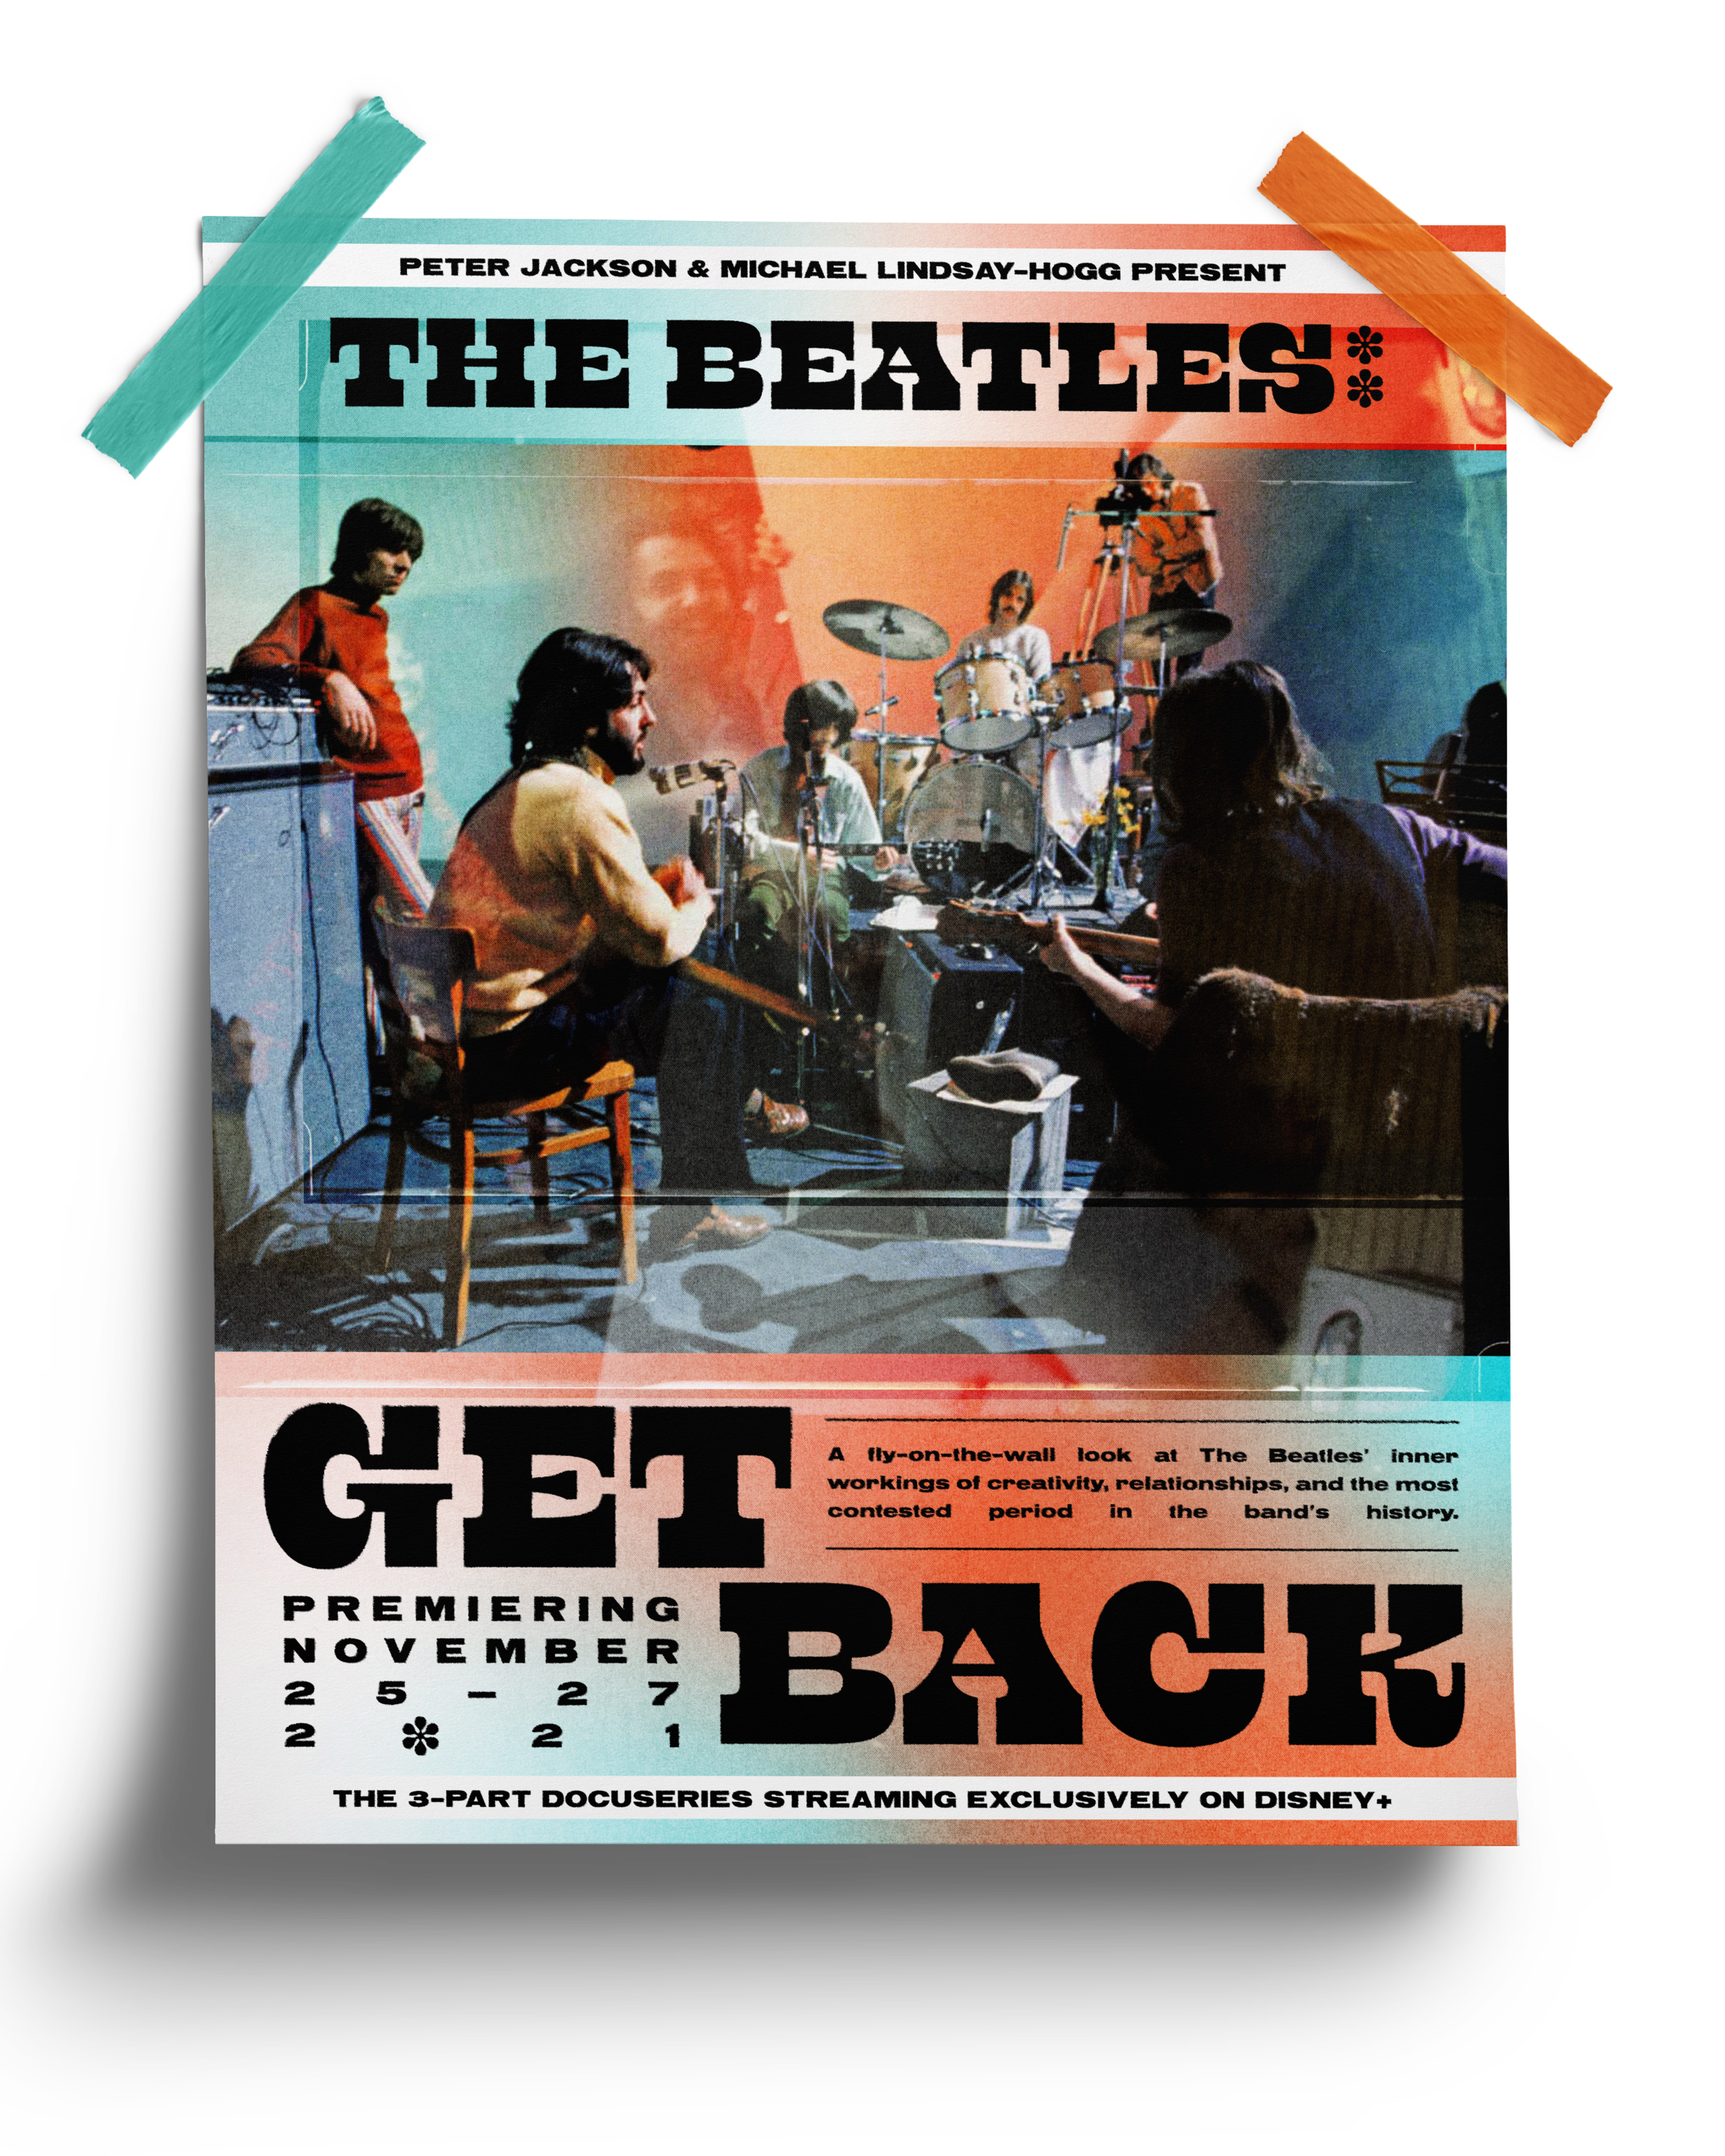  The Beatles: “Get Back” Docuseries  *concept  